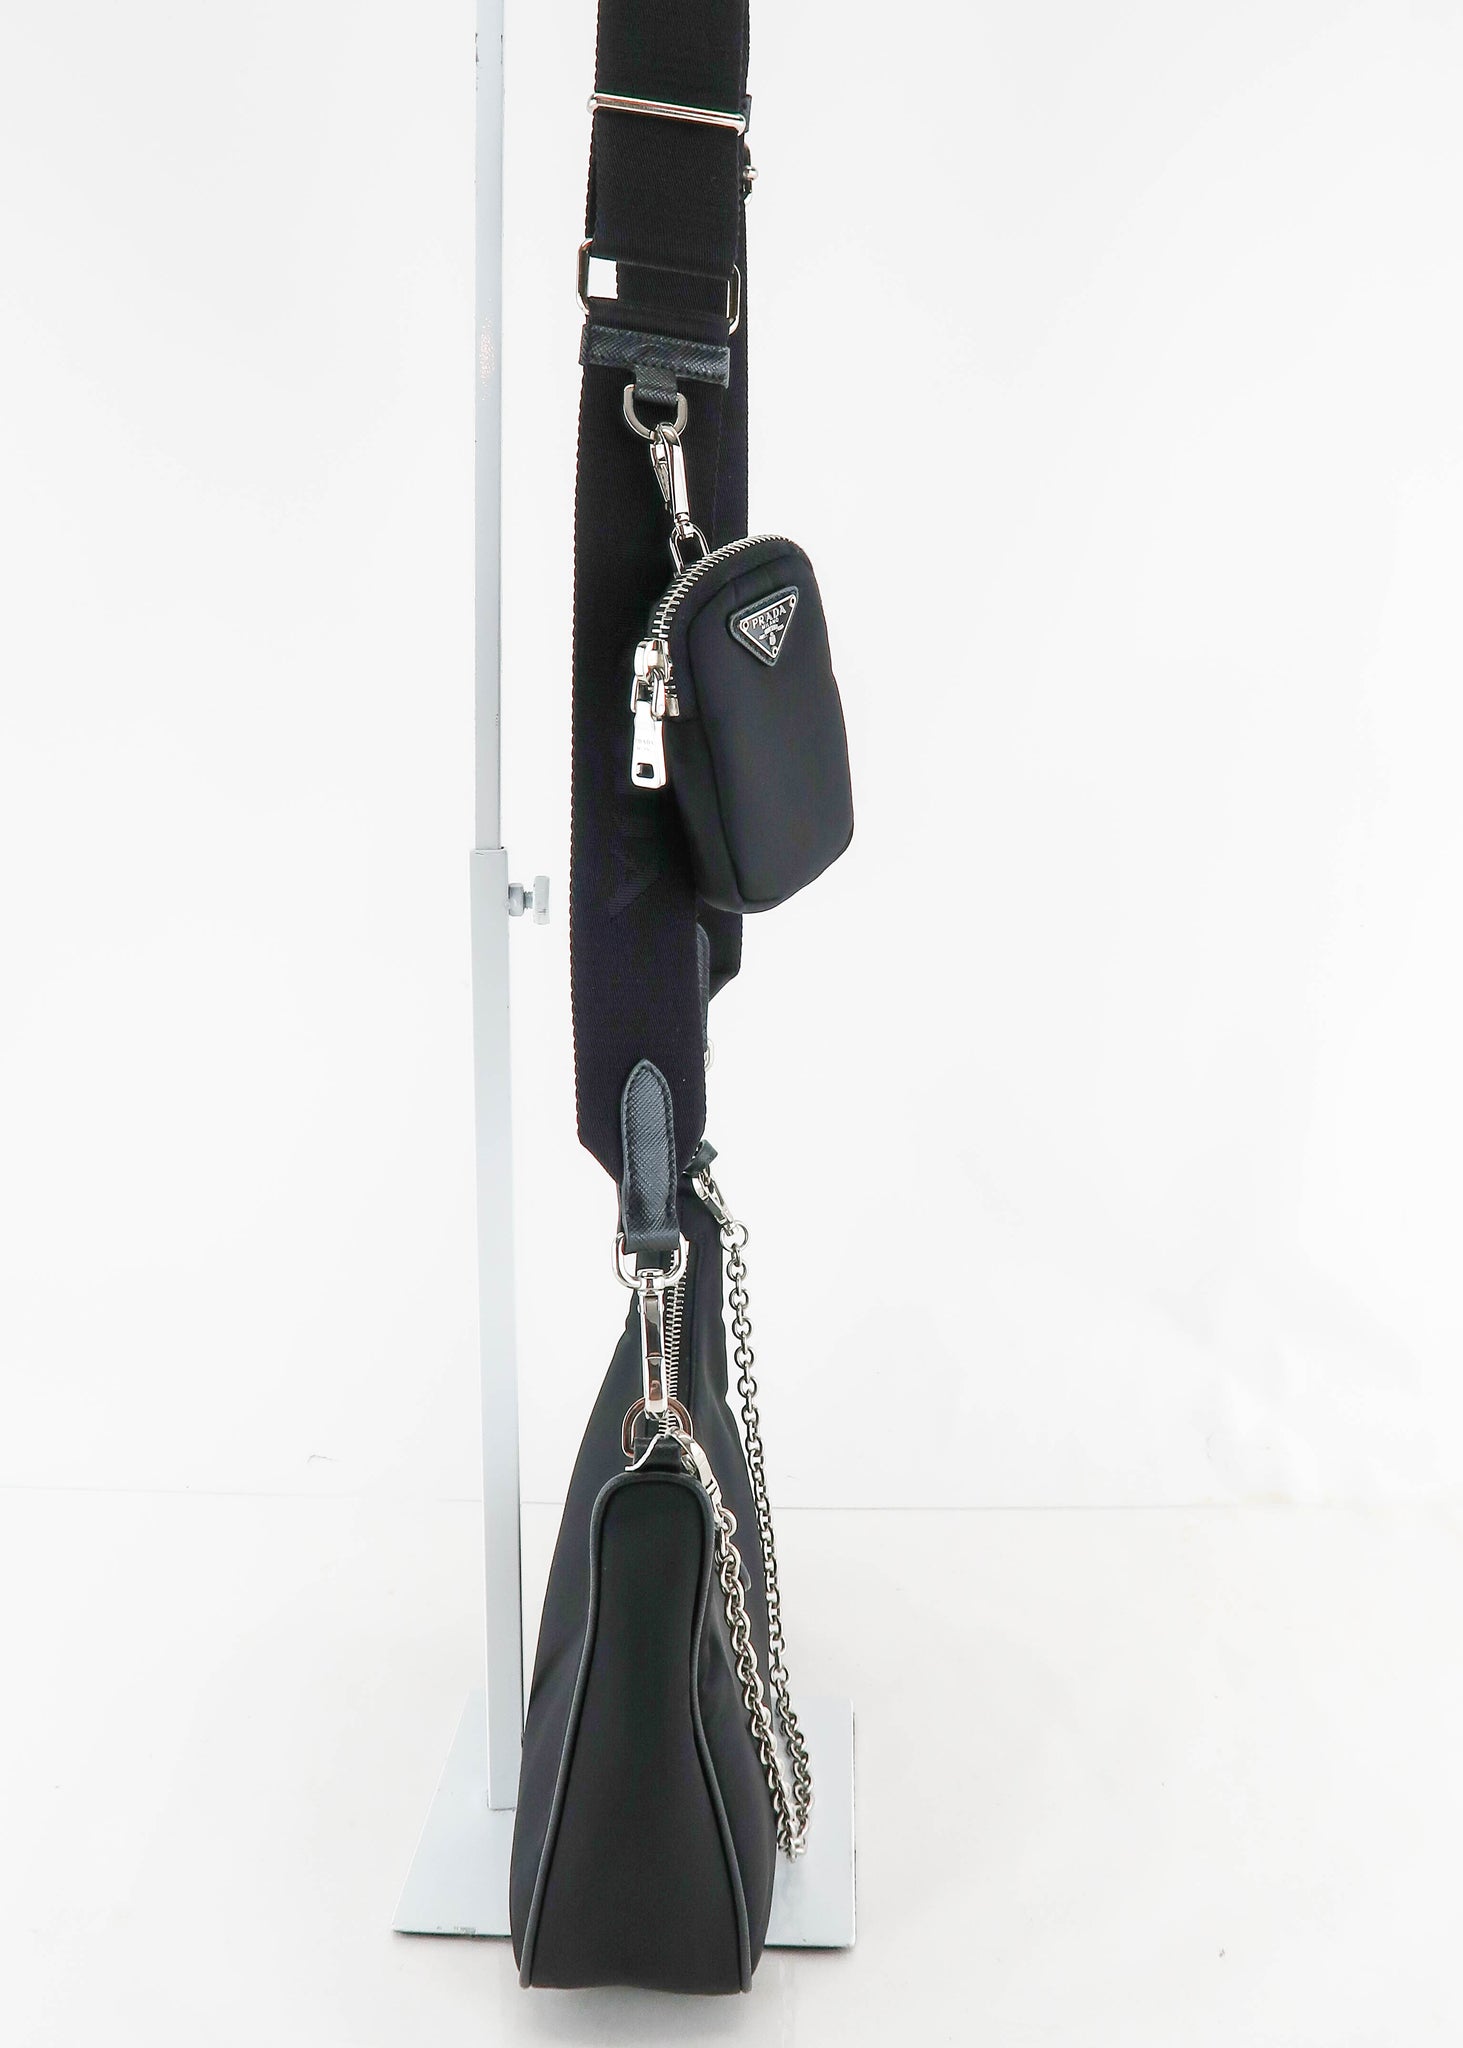 Prada Re-Edition Nylon Black – DAC